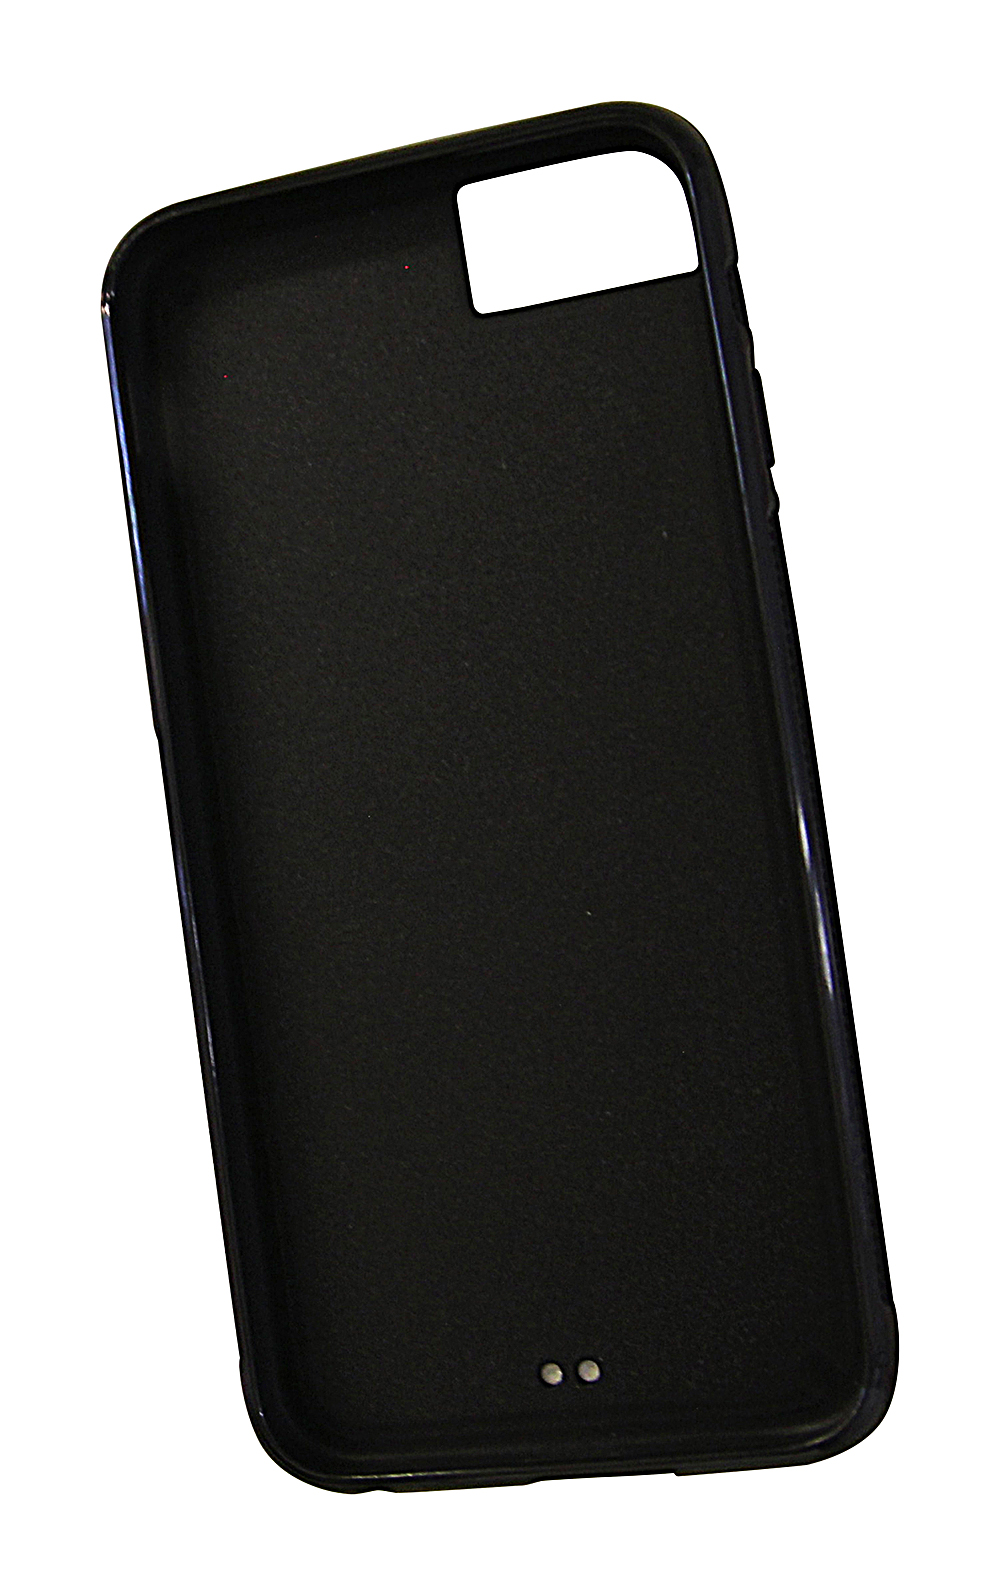 CoverInSkimblocker XL Magnet Fodral iPhone 7